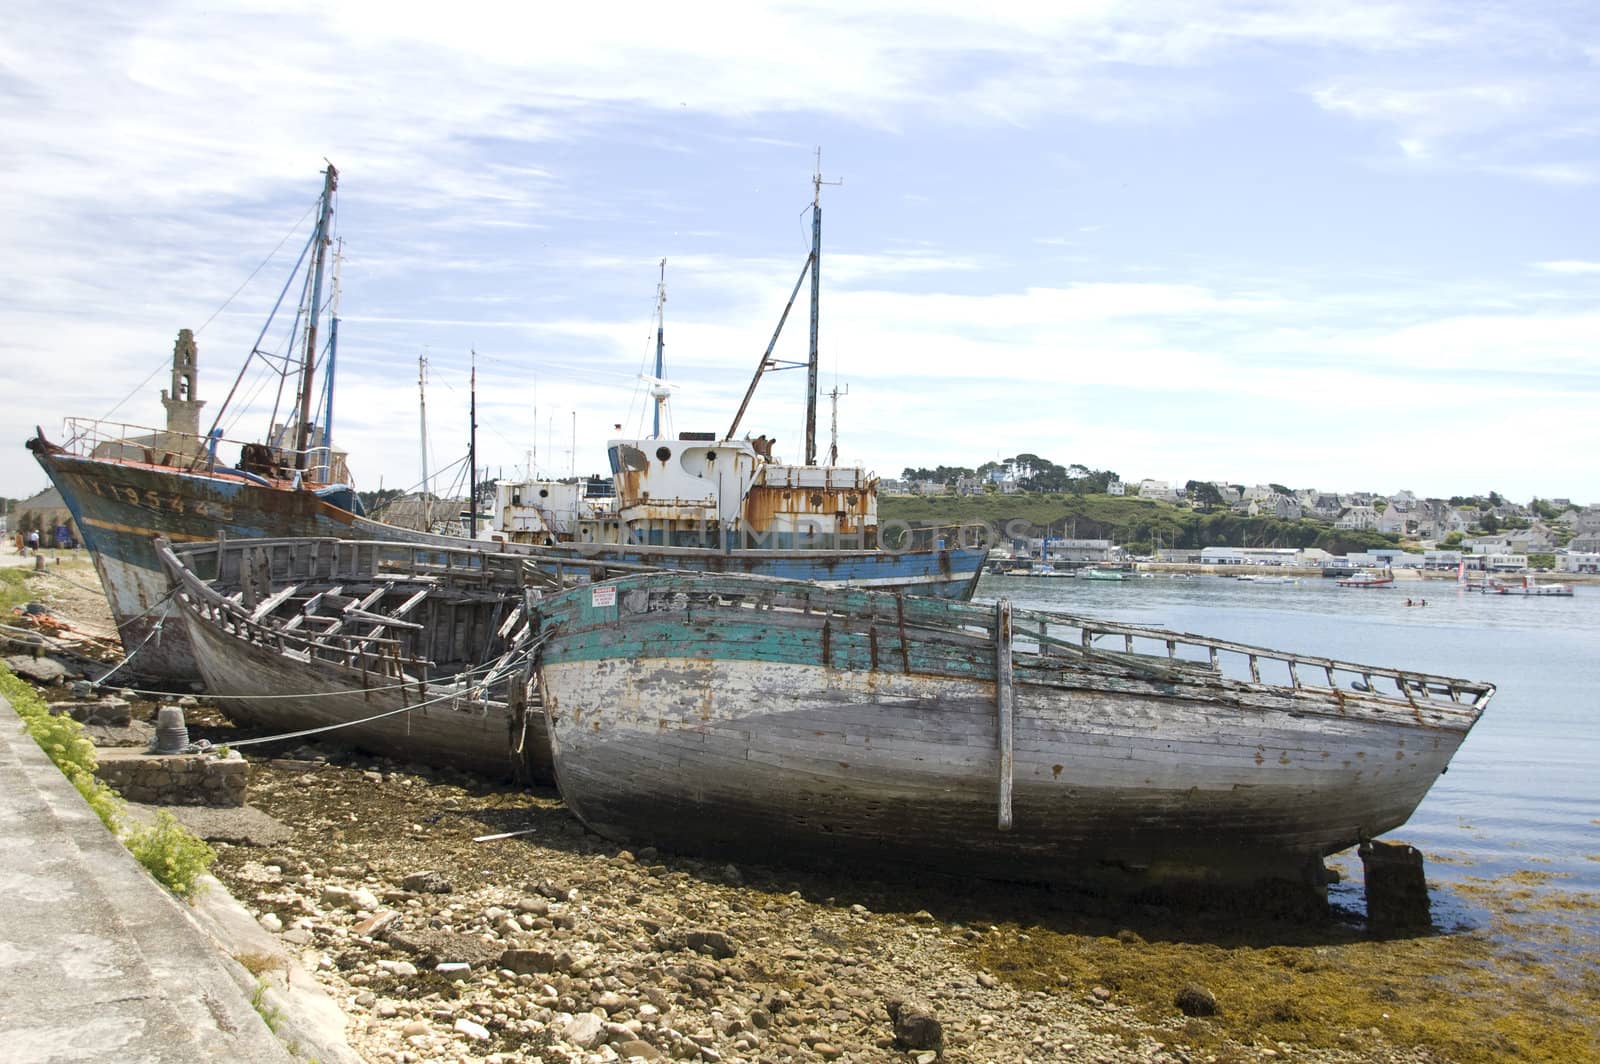 Shipwrecks at the harbor of Camaret-sur-mer in Brittany, France